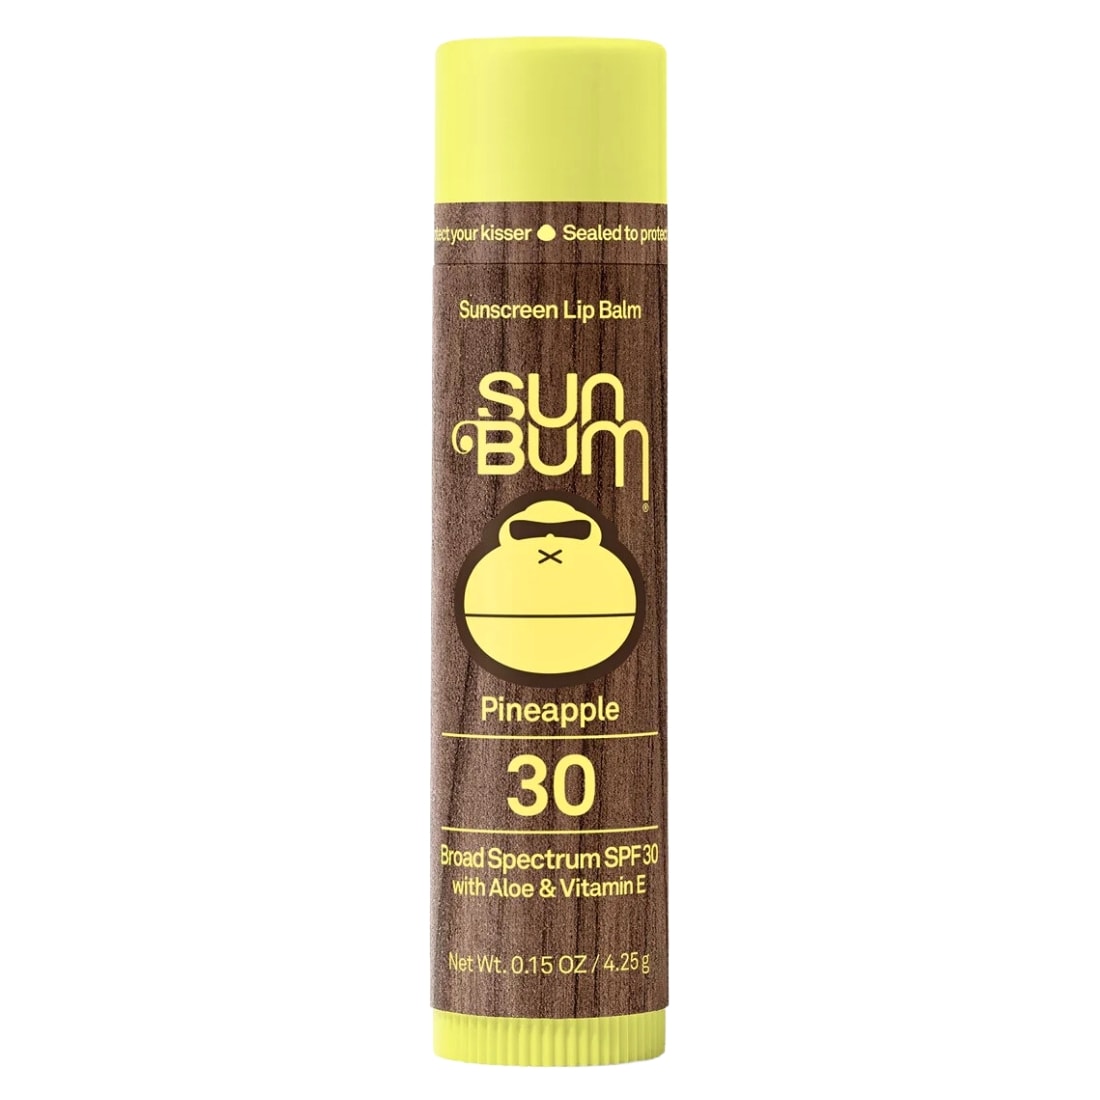 Sun Bum Original Spf30 Sunscreen Lip Balm - Pineapple - Sunscreen by Sun Bum 4.25g/0.15oz